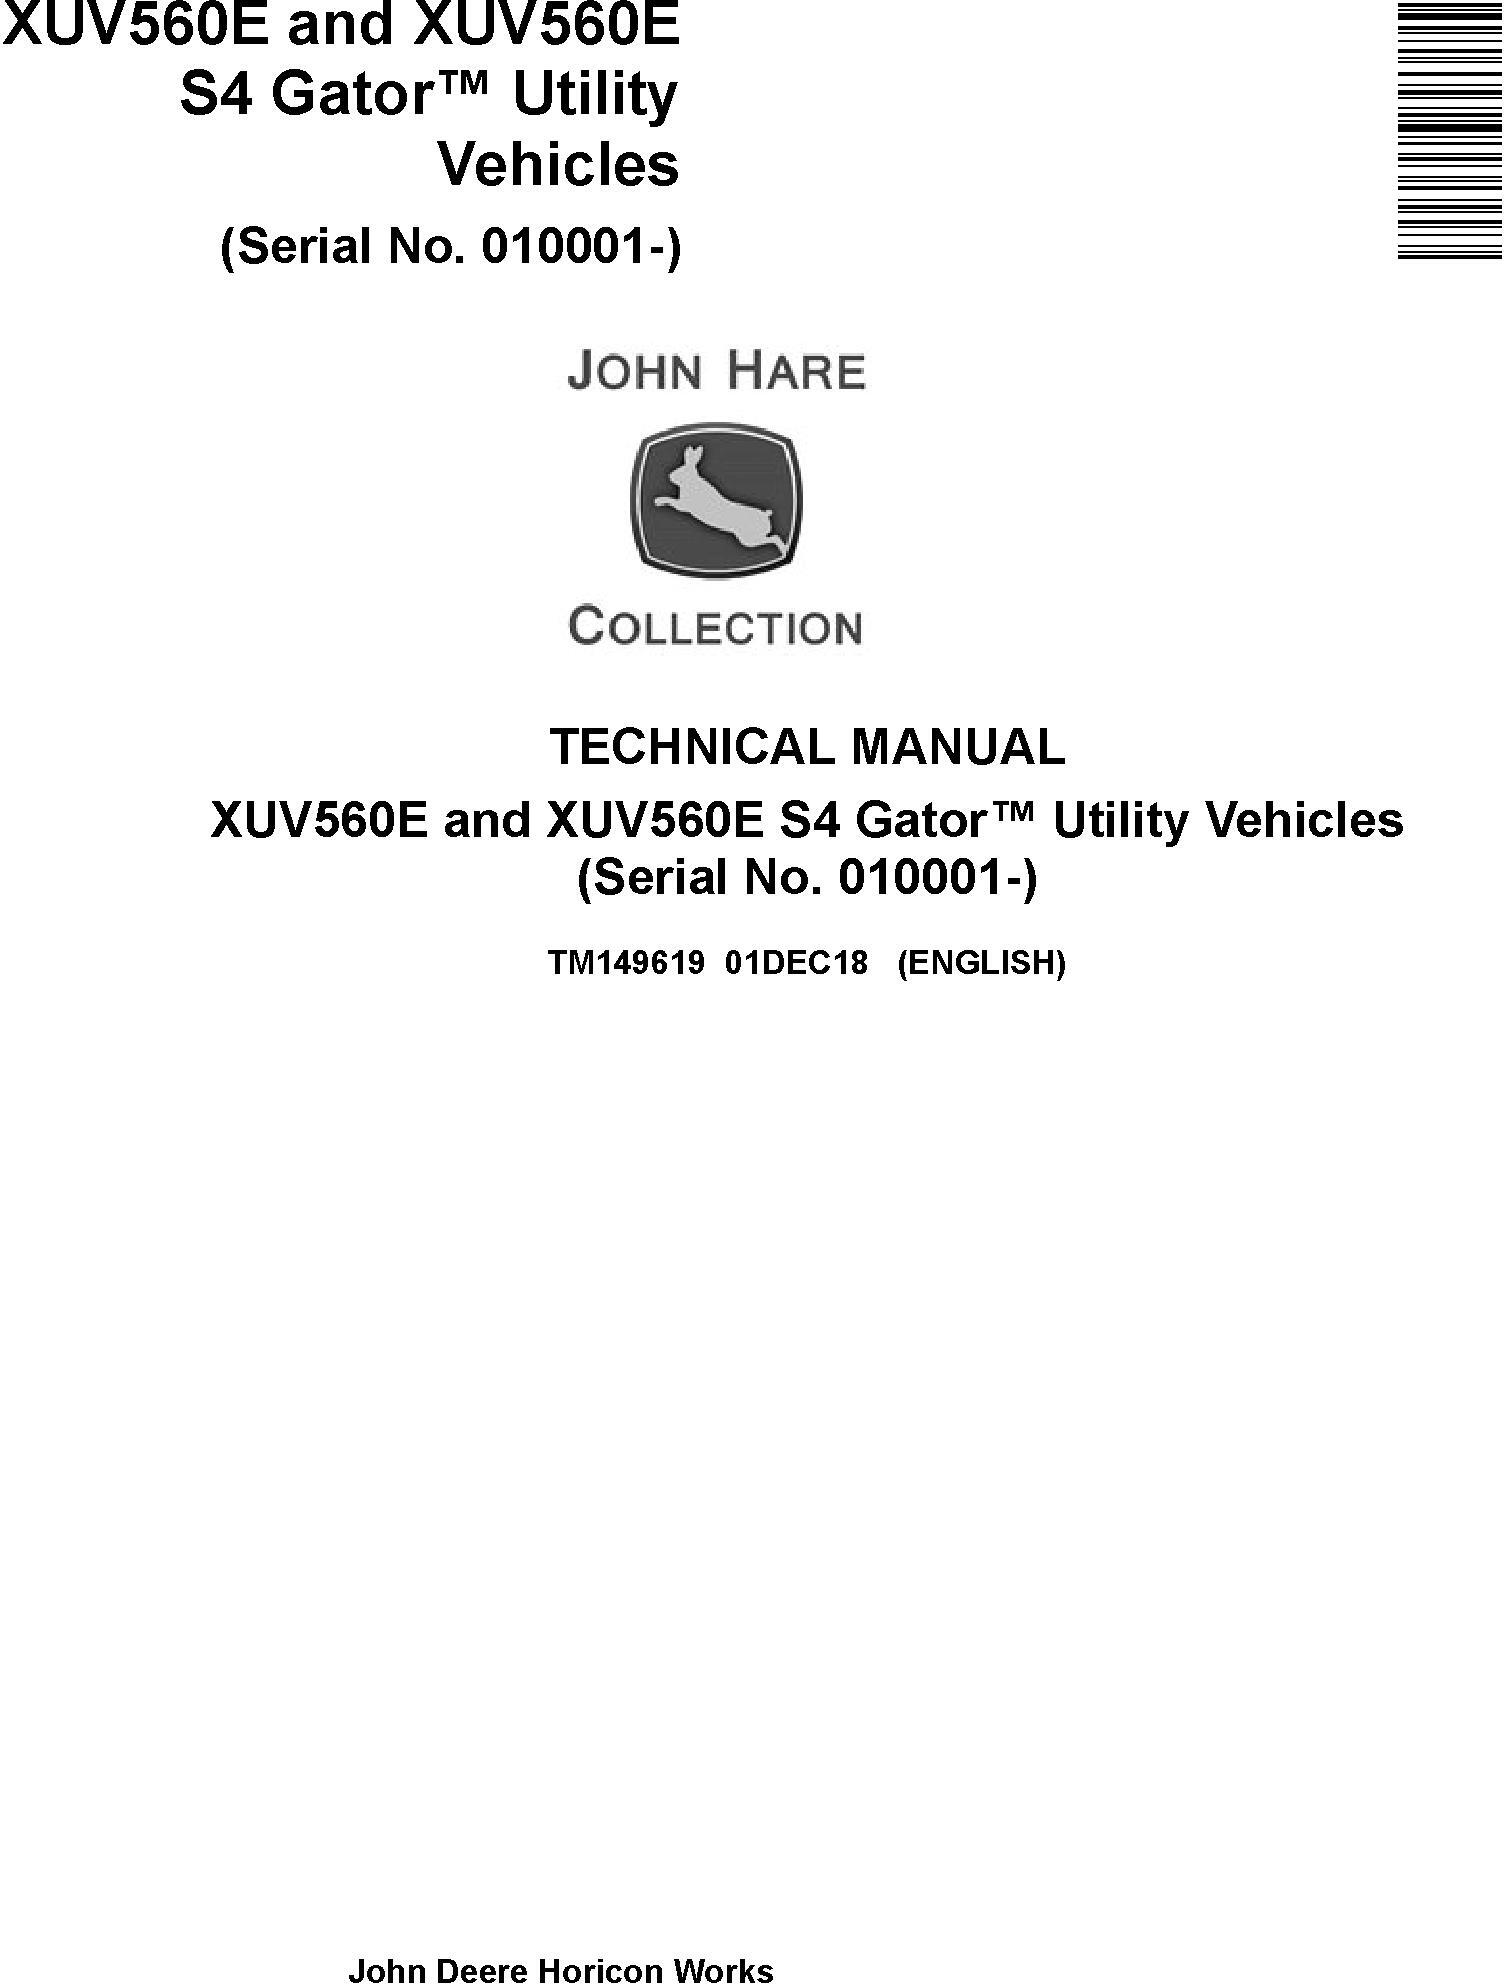 John Deere XUV560E and XUV560E S4 Gator Utility Vehicles (SN. 010001-) Technical Manual (TM149619)